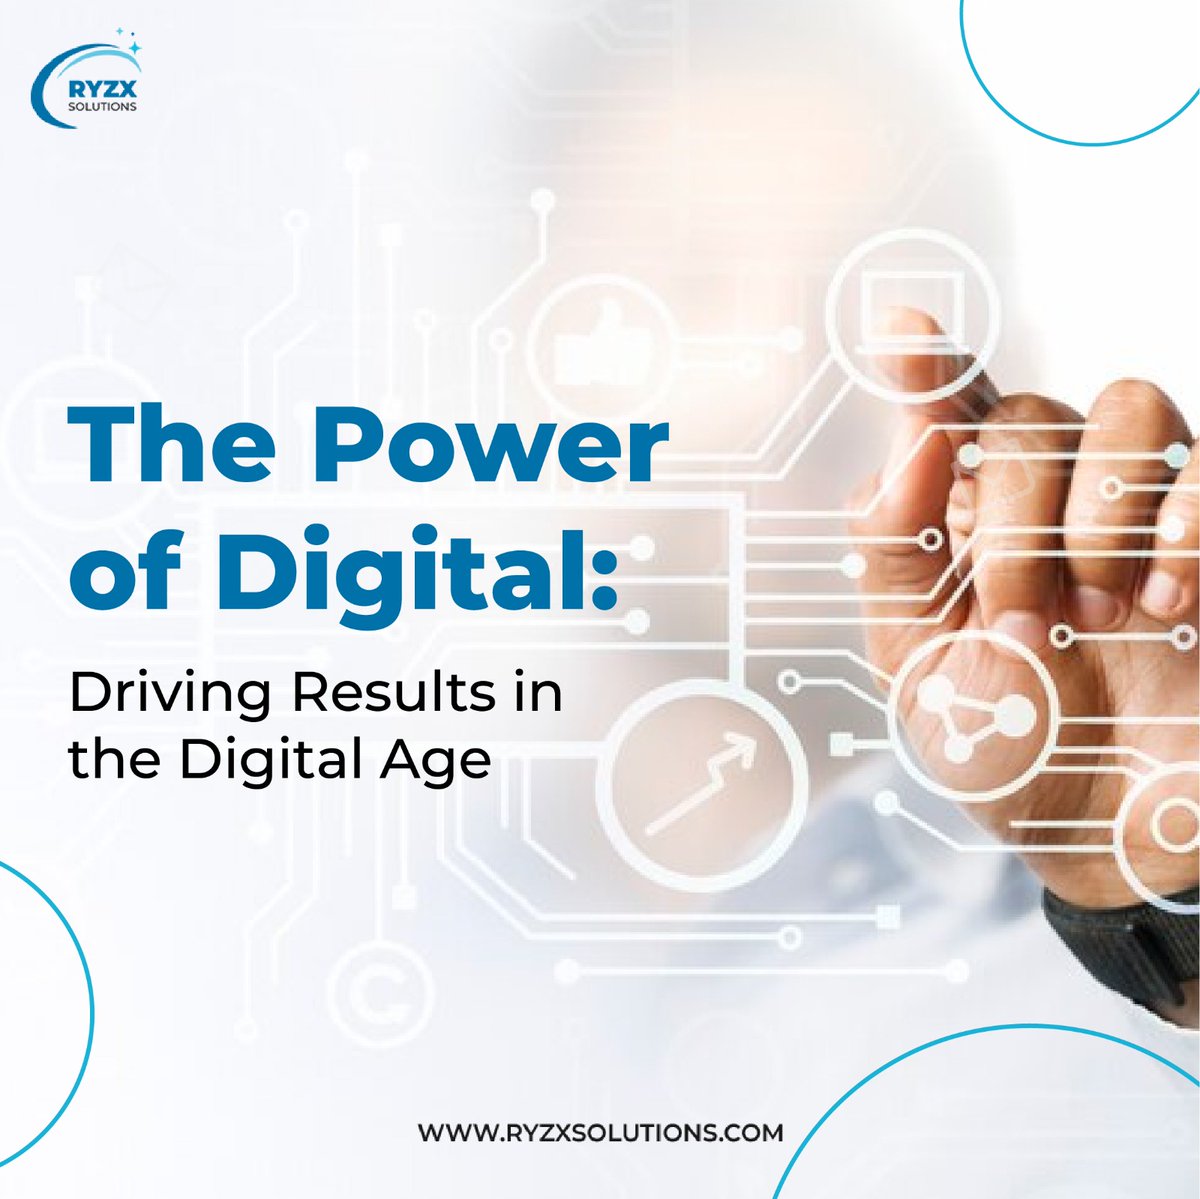 🌟✨ The Power of Digital: Driving Results in the Digital Age ✨🌟

#RYZXSolutions #DigitalTransformation #DigitalStrategy #TechInnovation #DataAnalytics #CustomerExperience #BusinessSolutions #DigitalMarketing #DataInsights #TechConsulting #digitalagency #advertisingagency